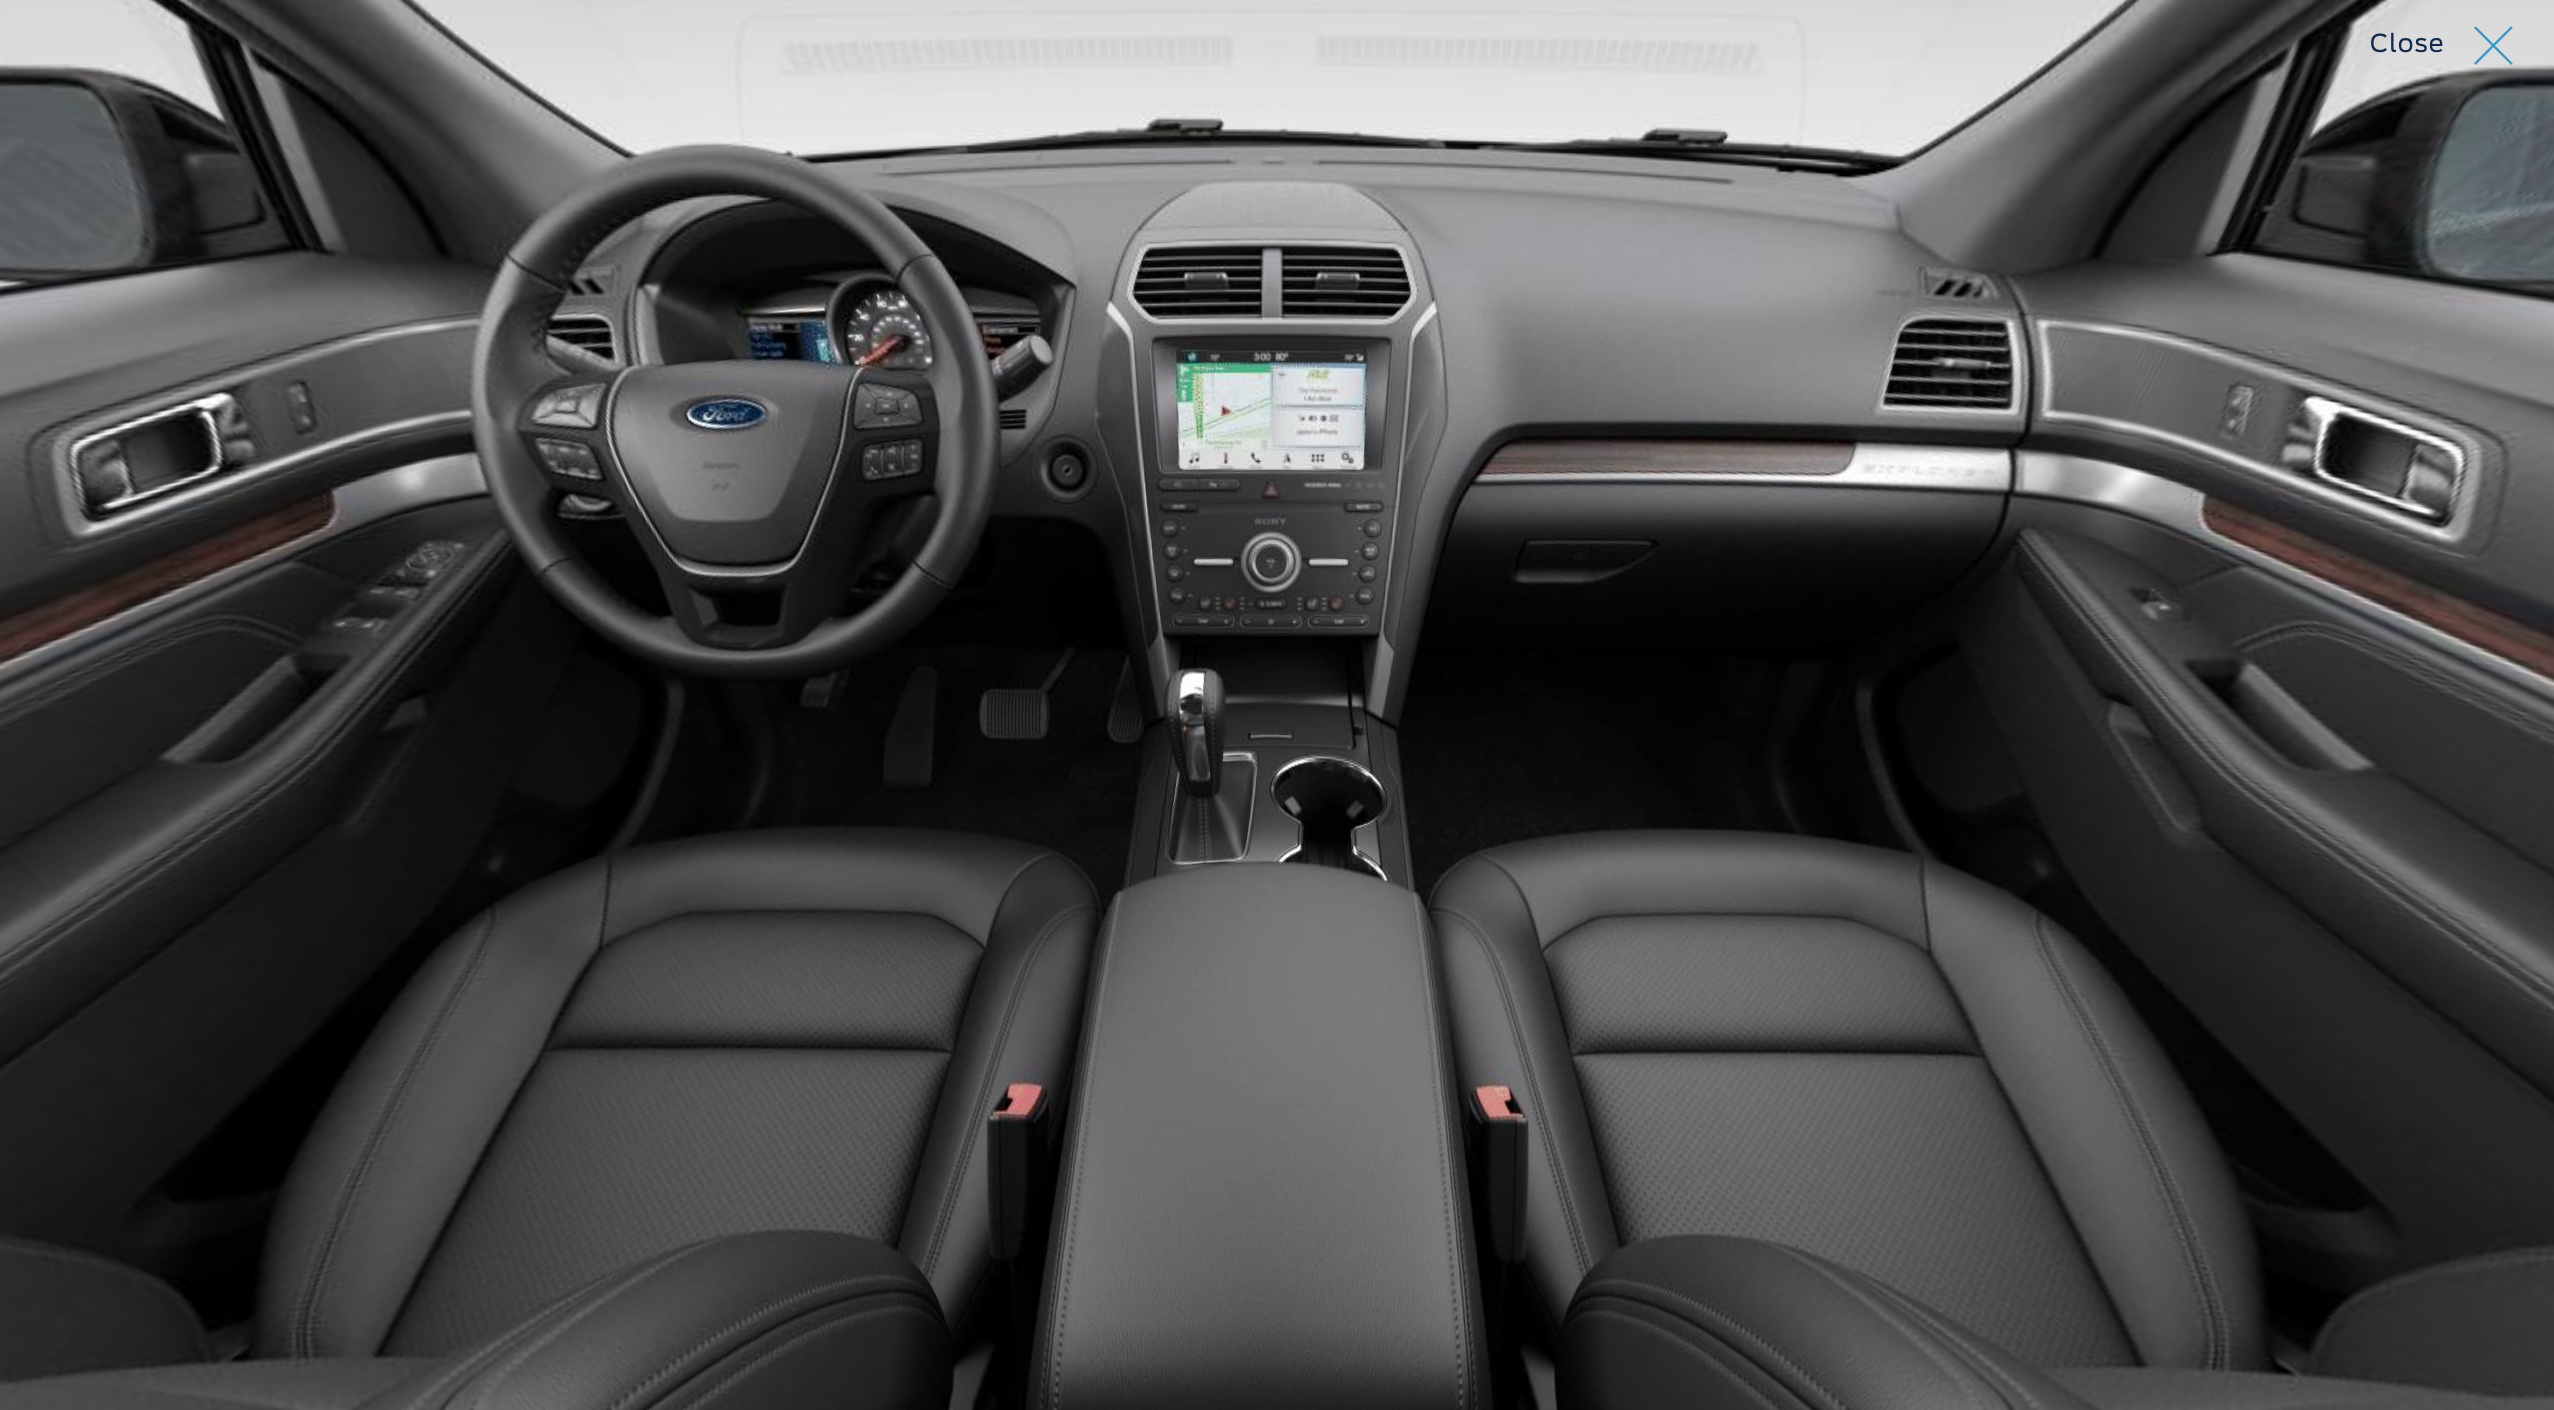 2019 Ford Explorer Interior Colors